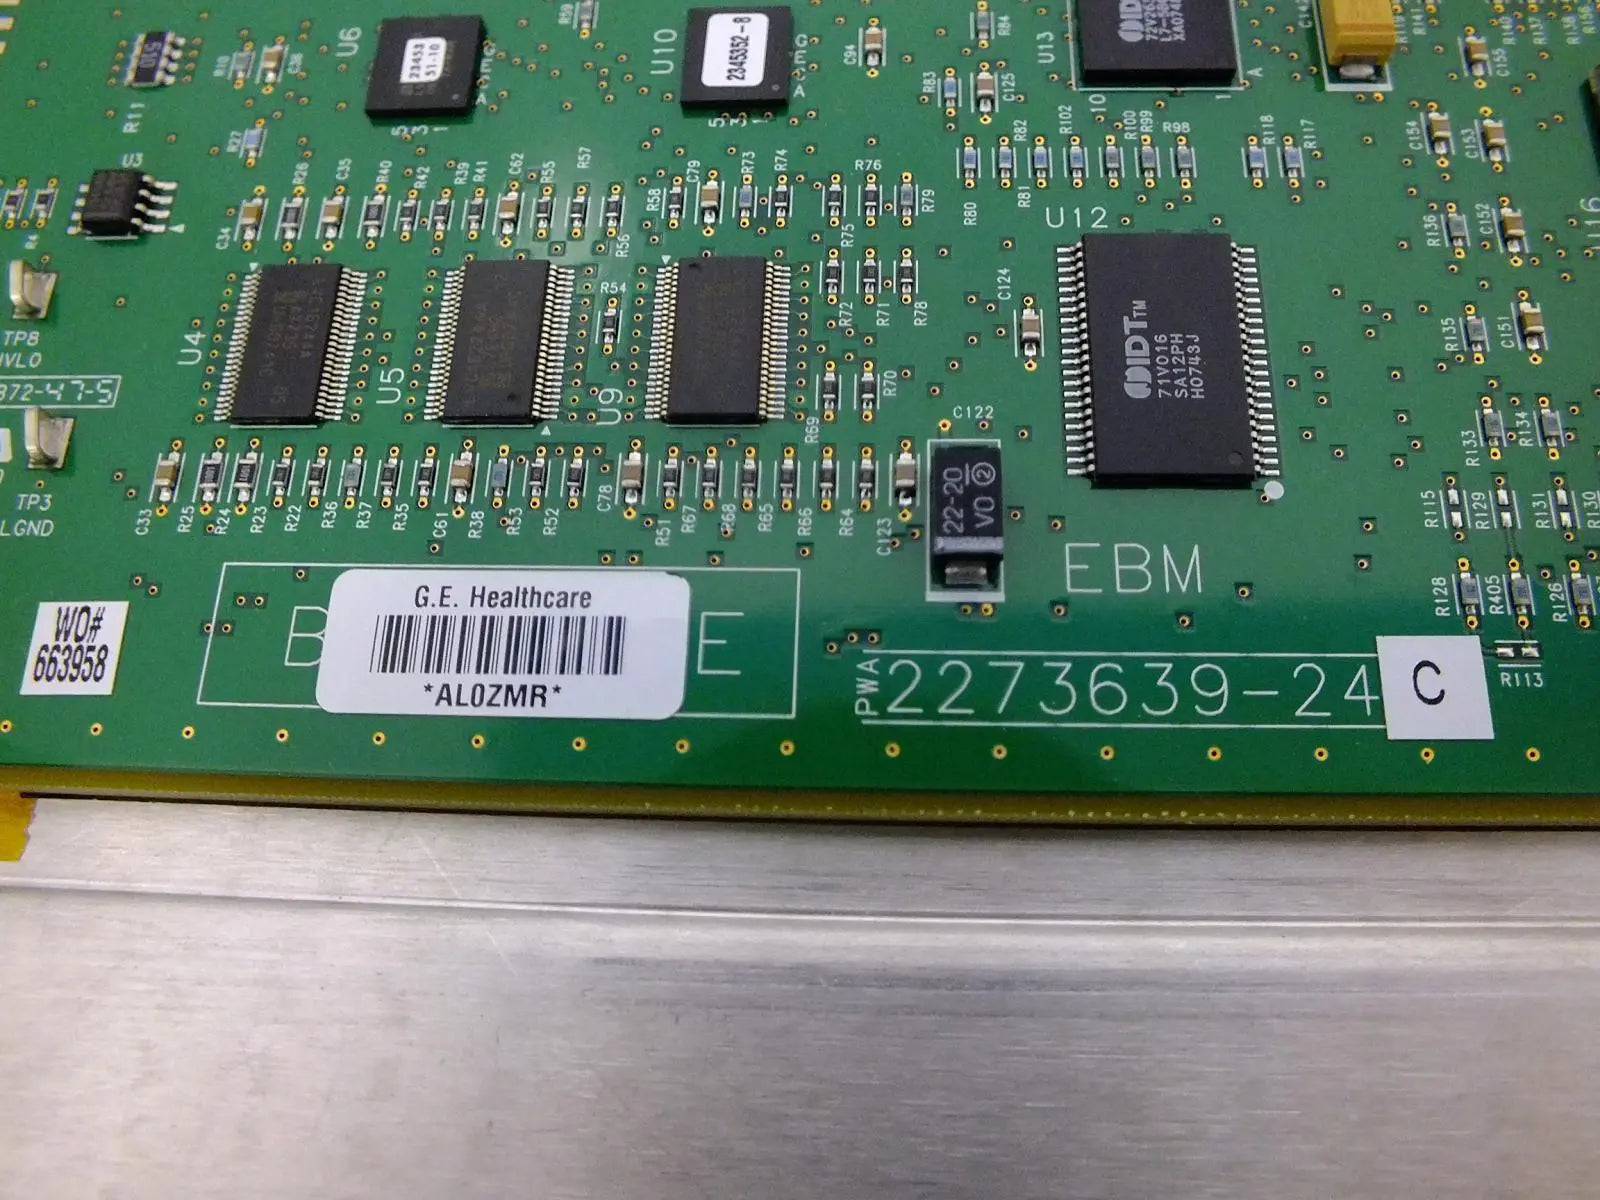 GE Loqic 9 Ultrasound EBM Plug-In Board 2273639-24C 2273640 REV 4